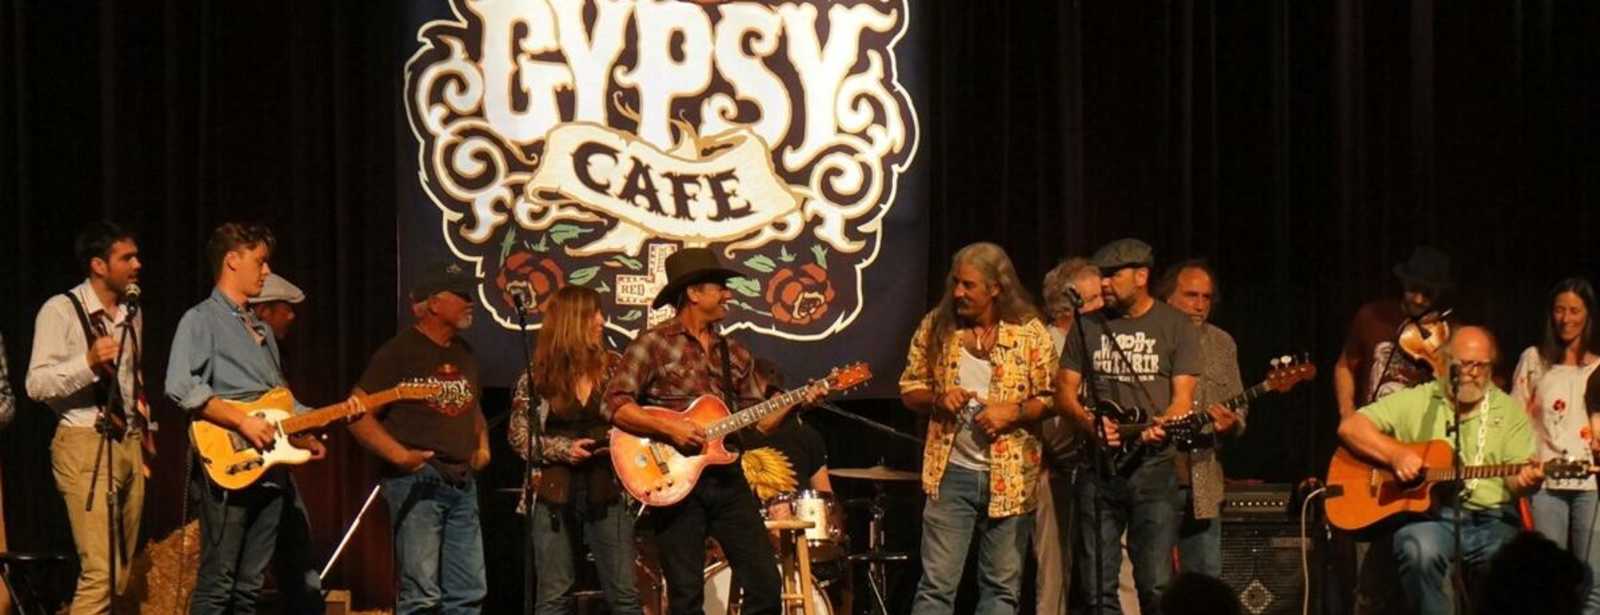 Gypsy Cafe Header Image